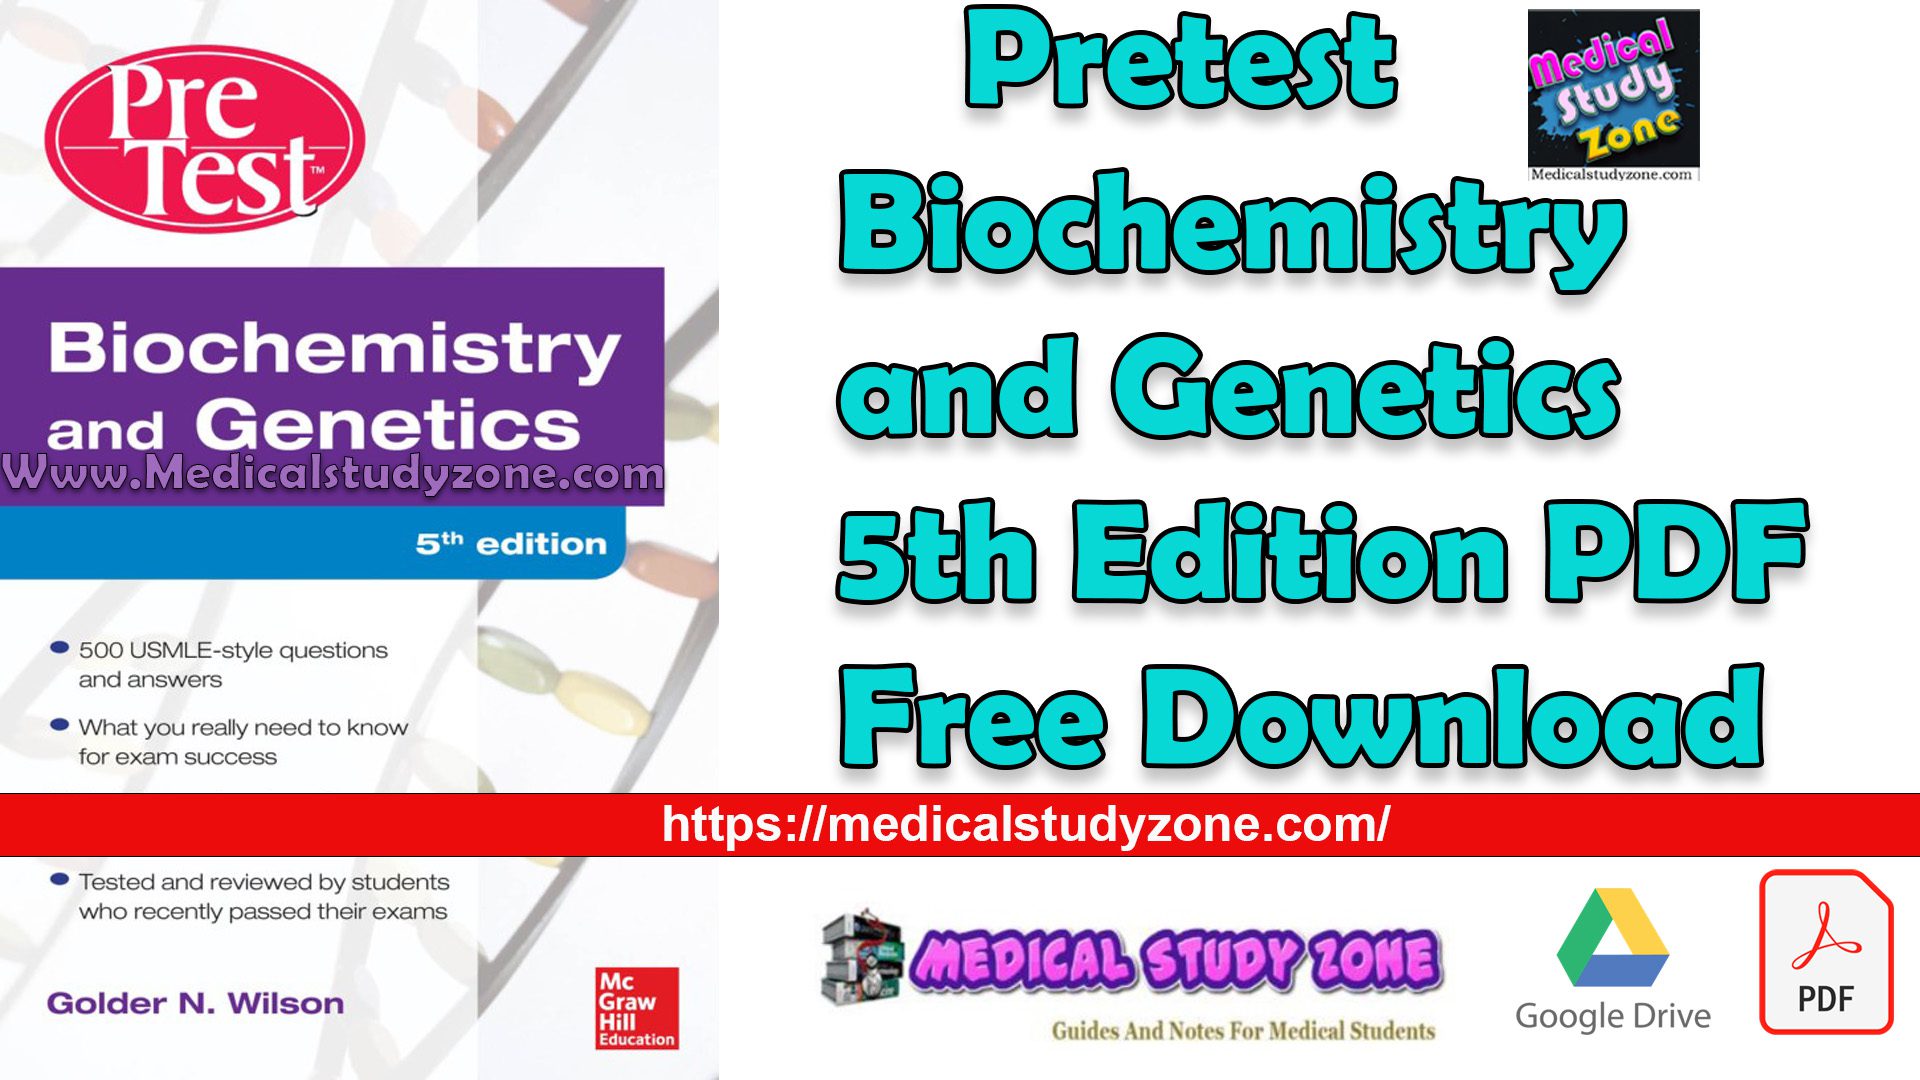 Pretest Biochemistry and Genetics 5th Edition PDF Free Download